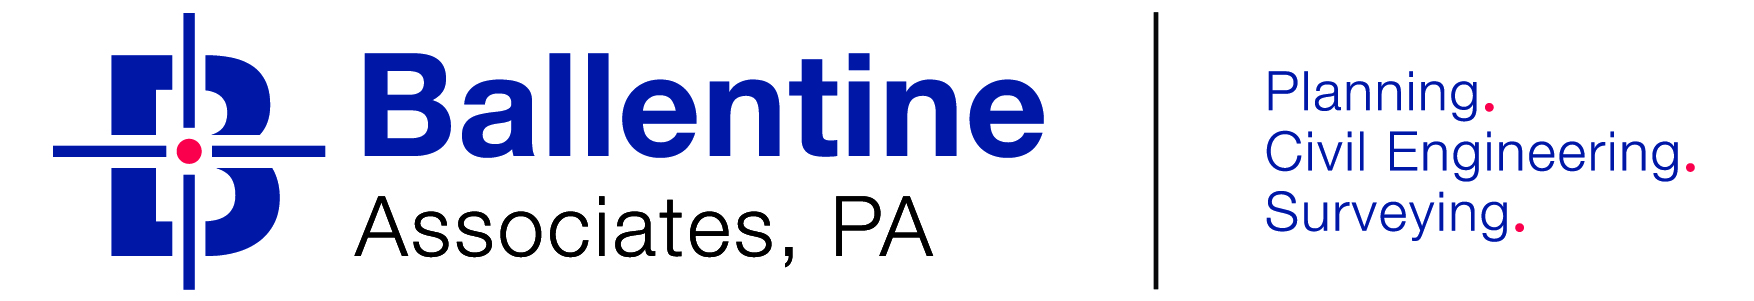 Ballentine Associates, PA